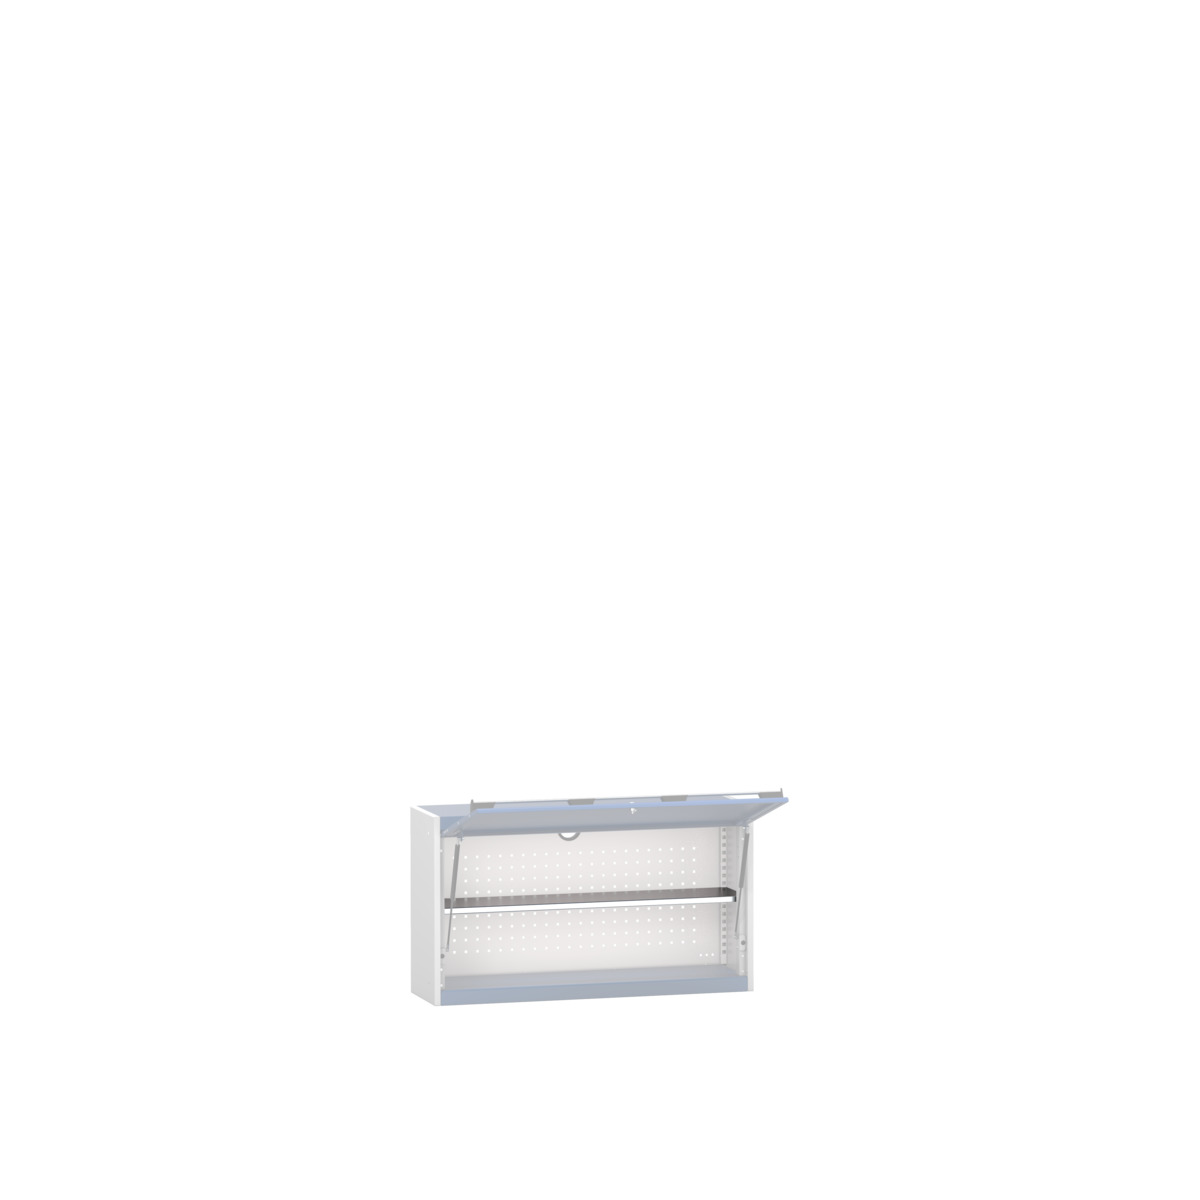 42101090.51 - cubio shelf kit